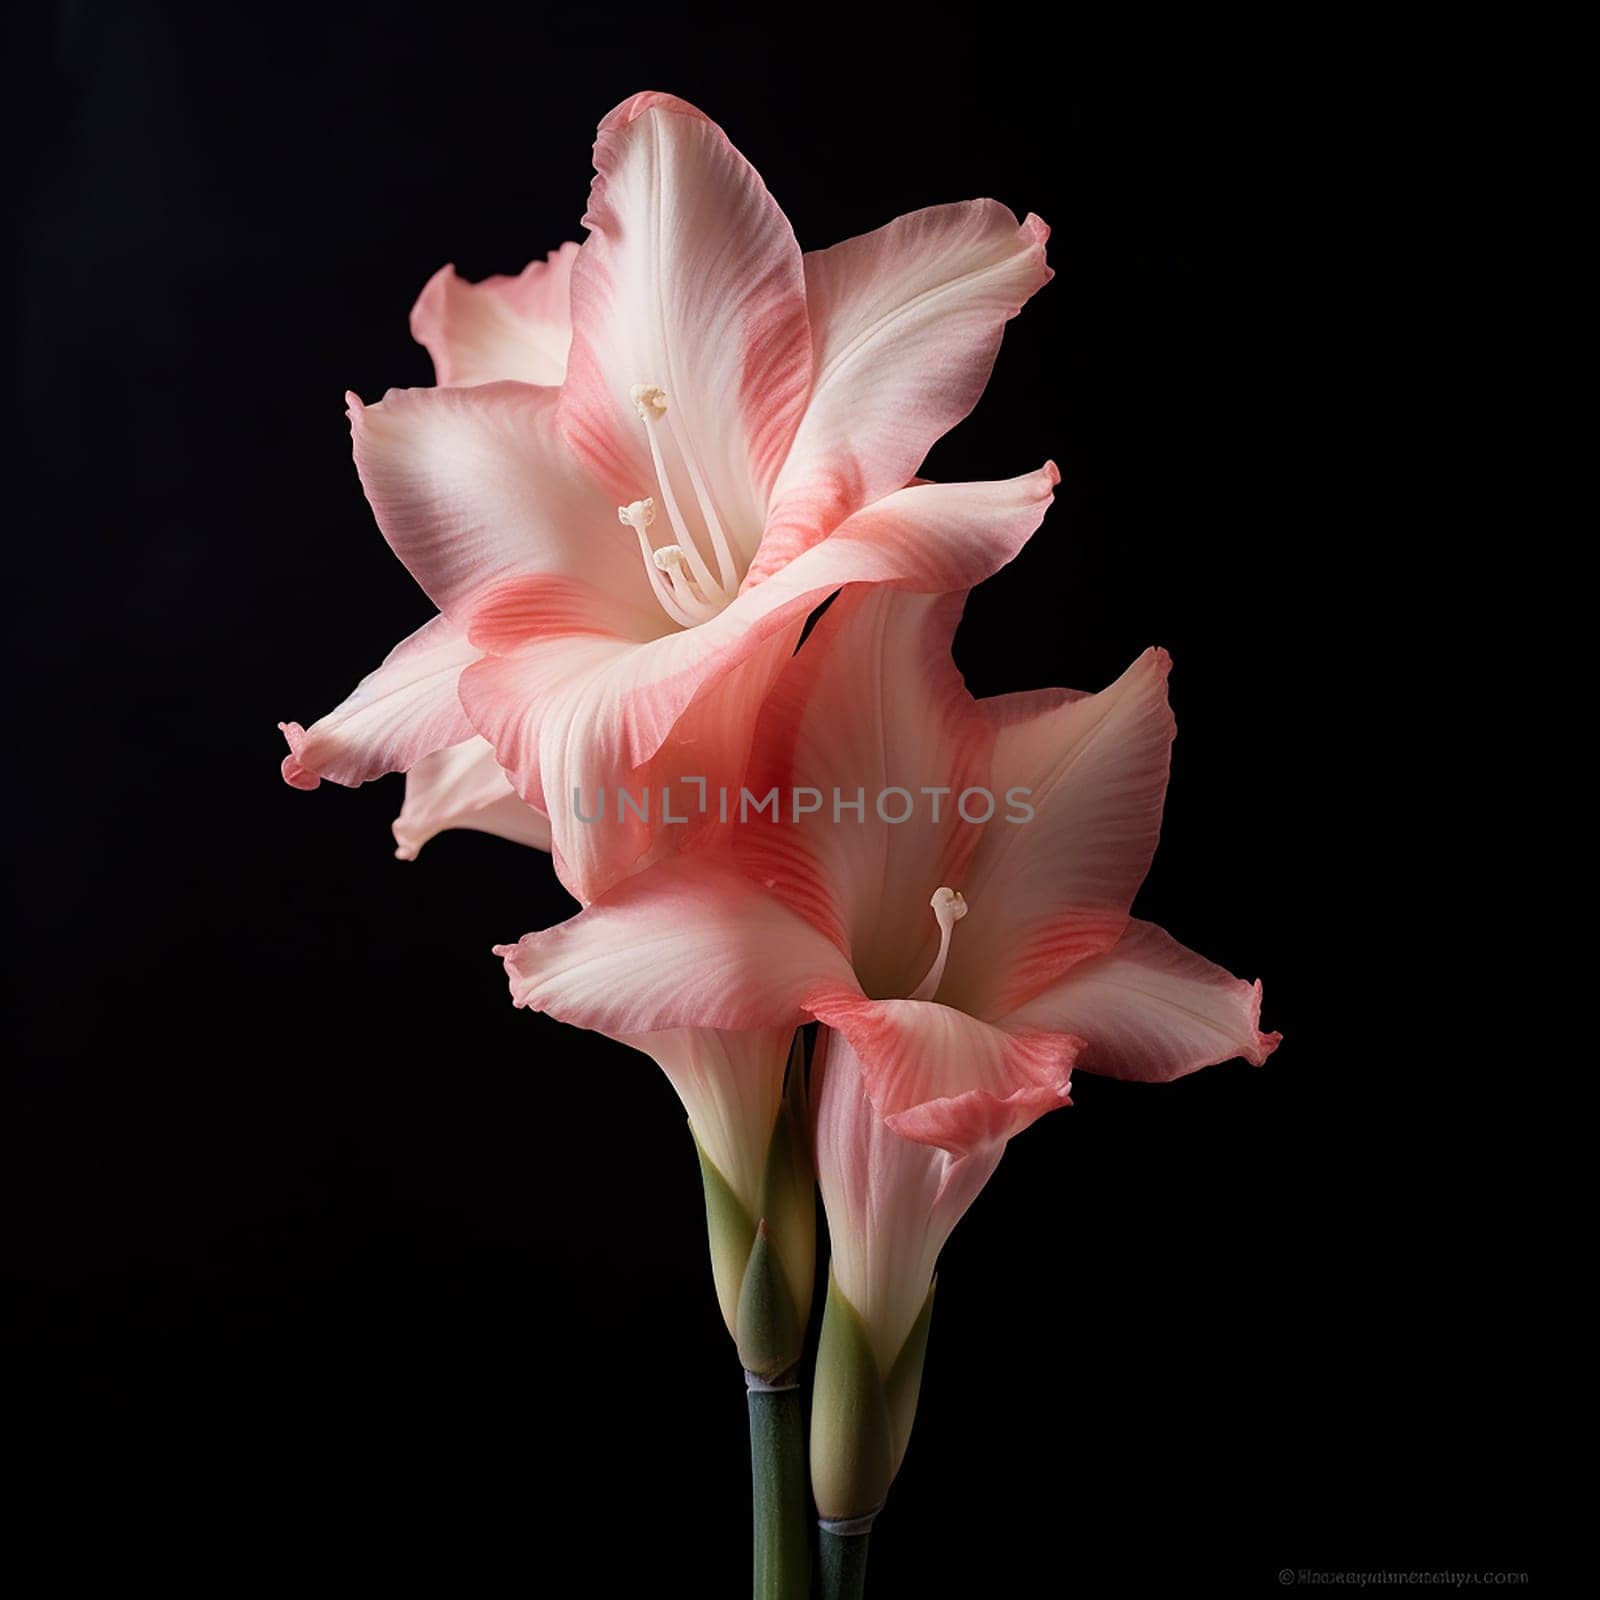 Elegant pink amaryllis blooms against a dark background. by Hype2art